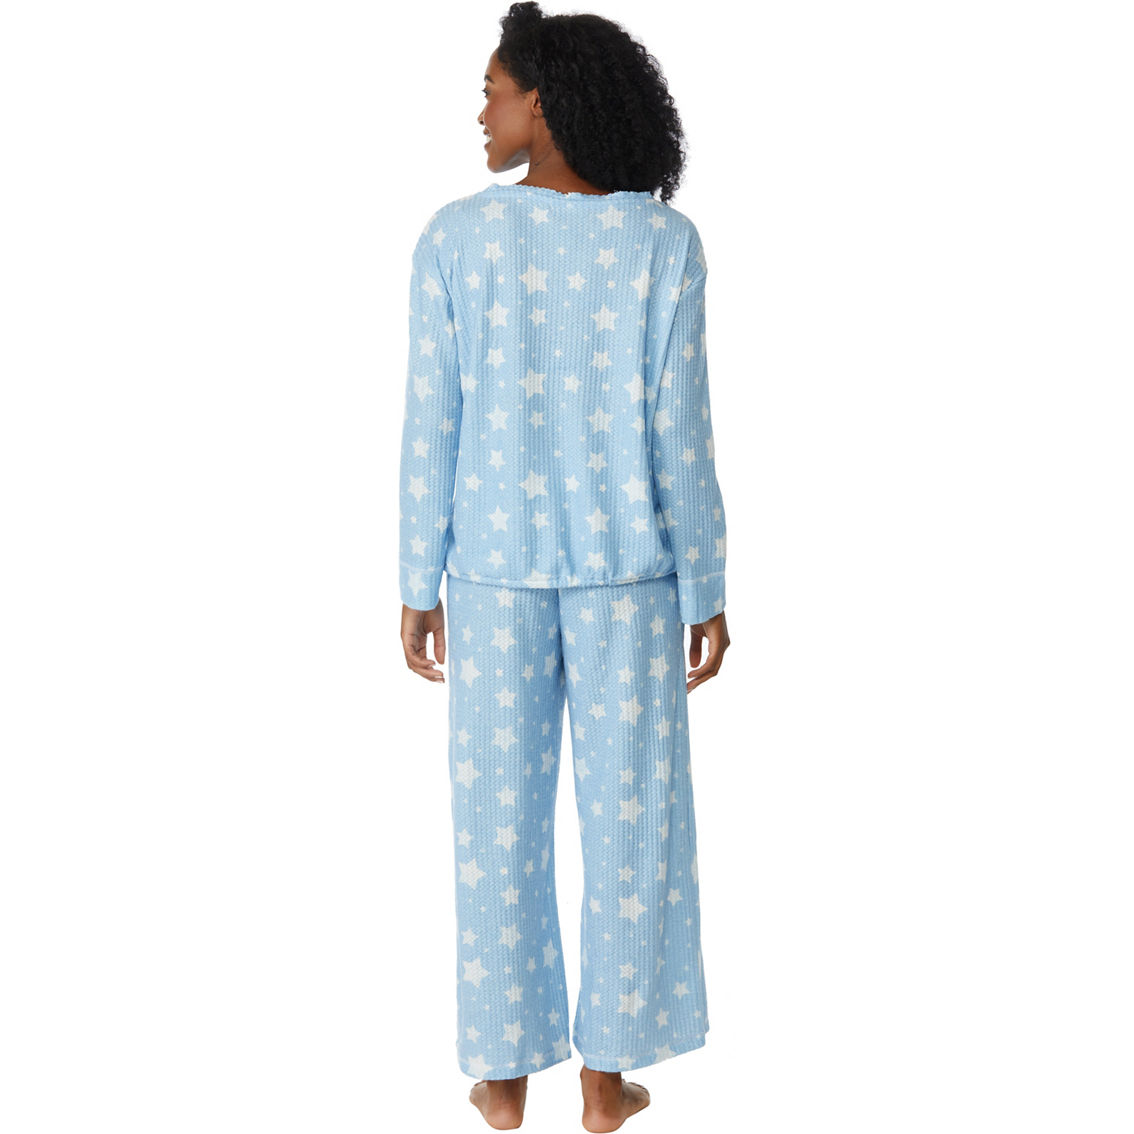 Rene Rofe Soft and Mellow Pajama 2 pc. Set - Image 2 of 3